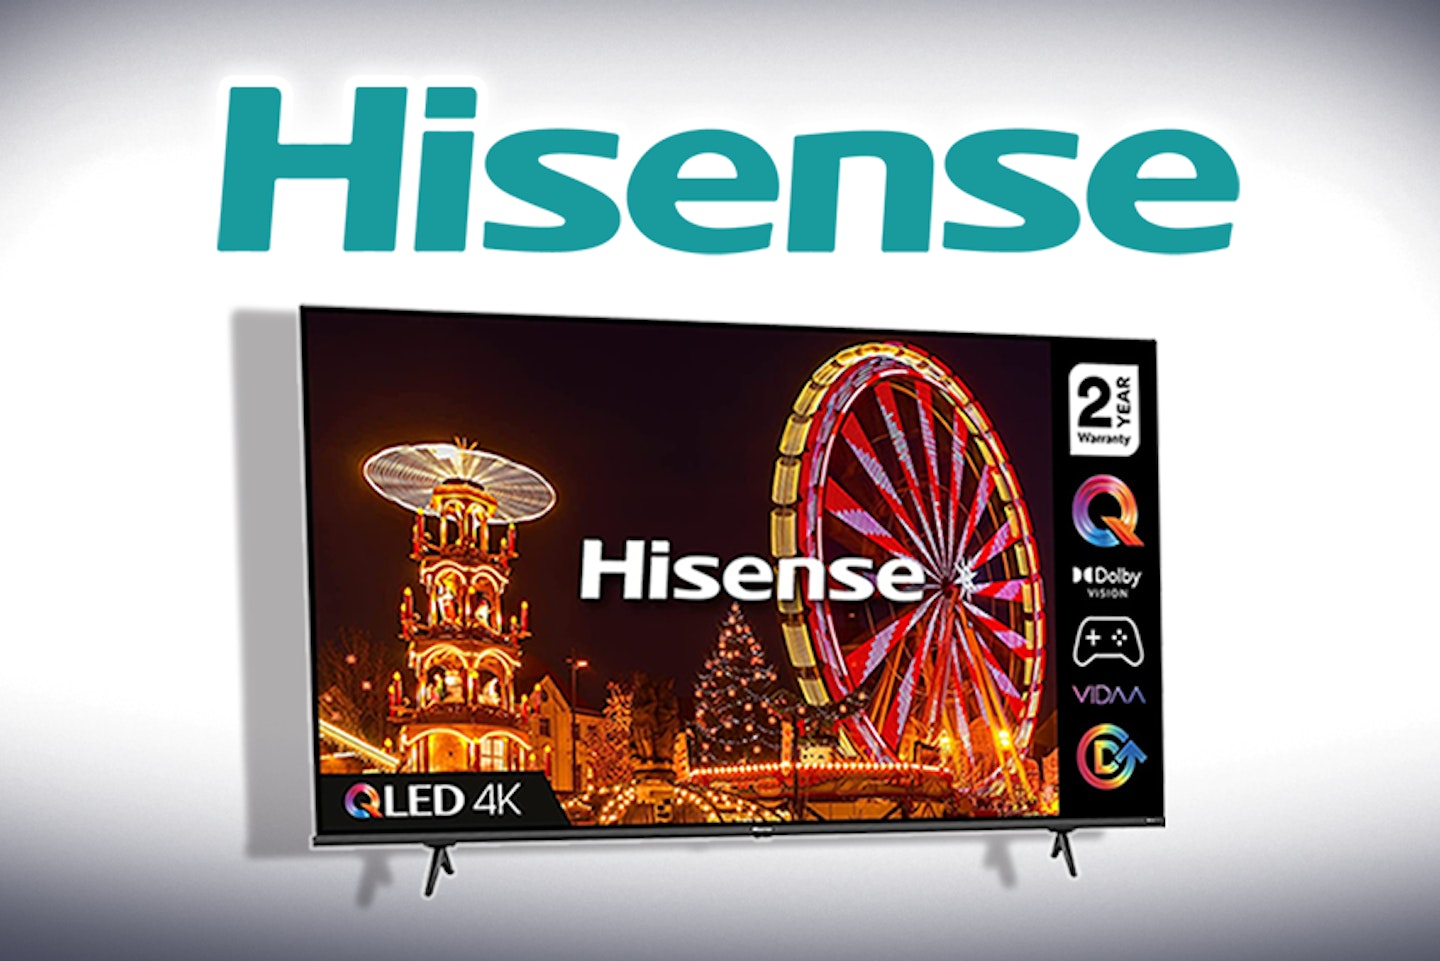 Hisense TV brand